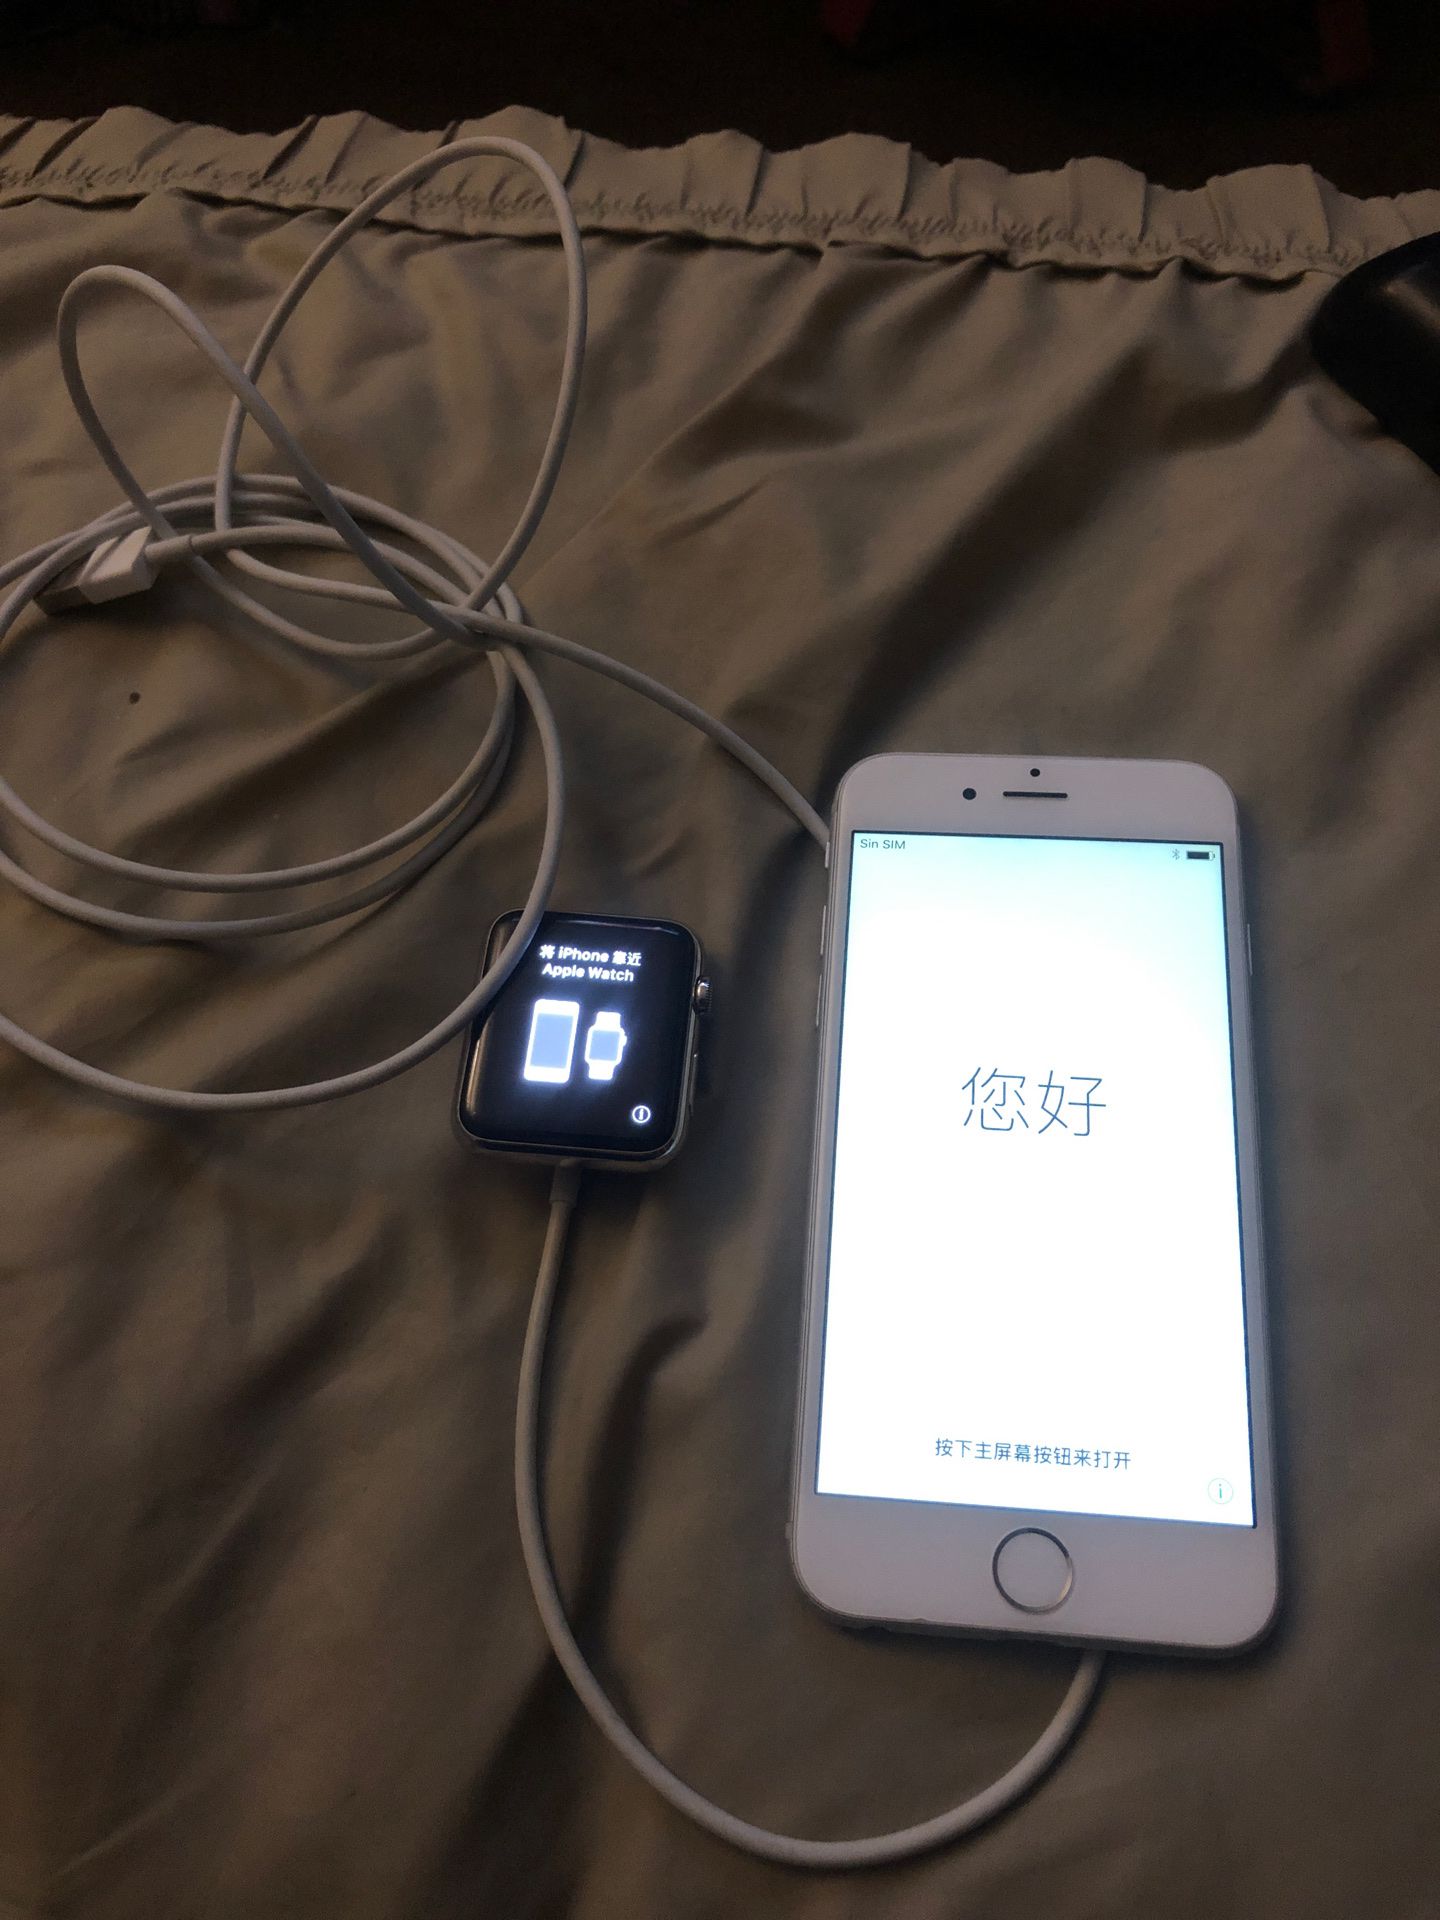 Apple Watch series 2 iPhone 6 Both locked